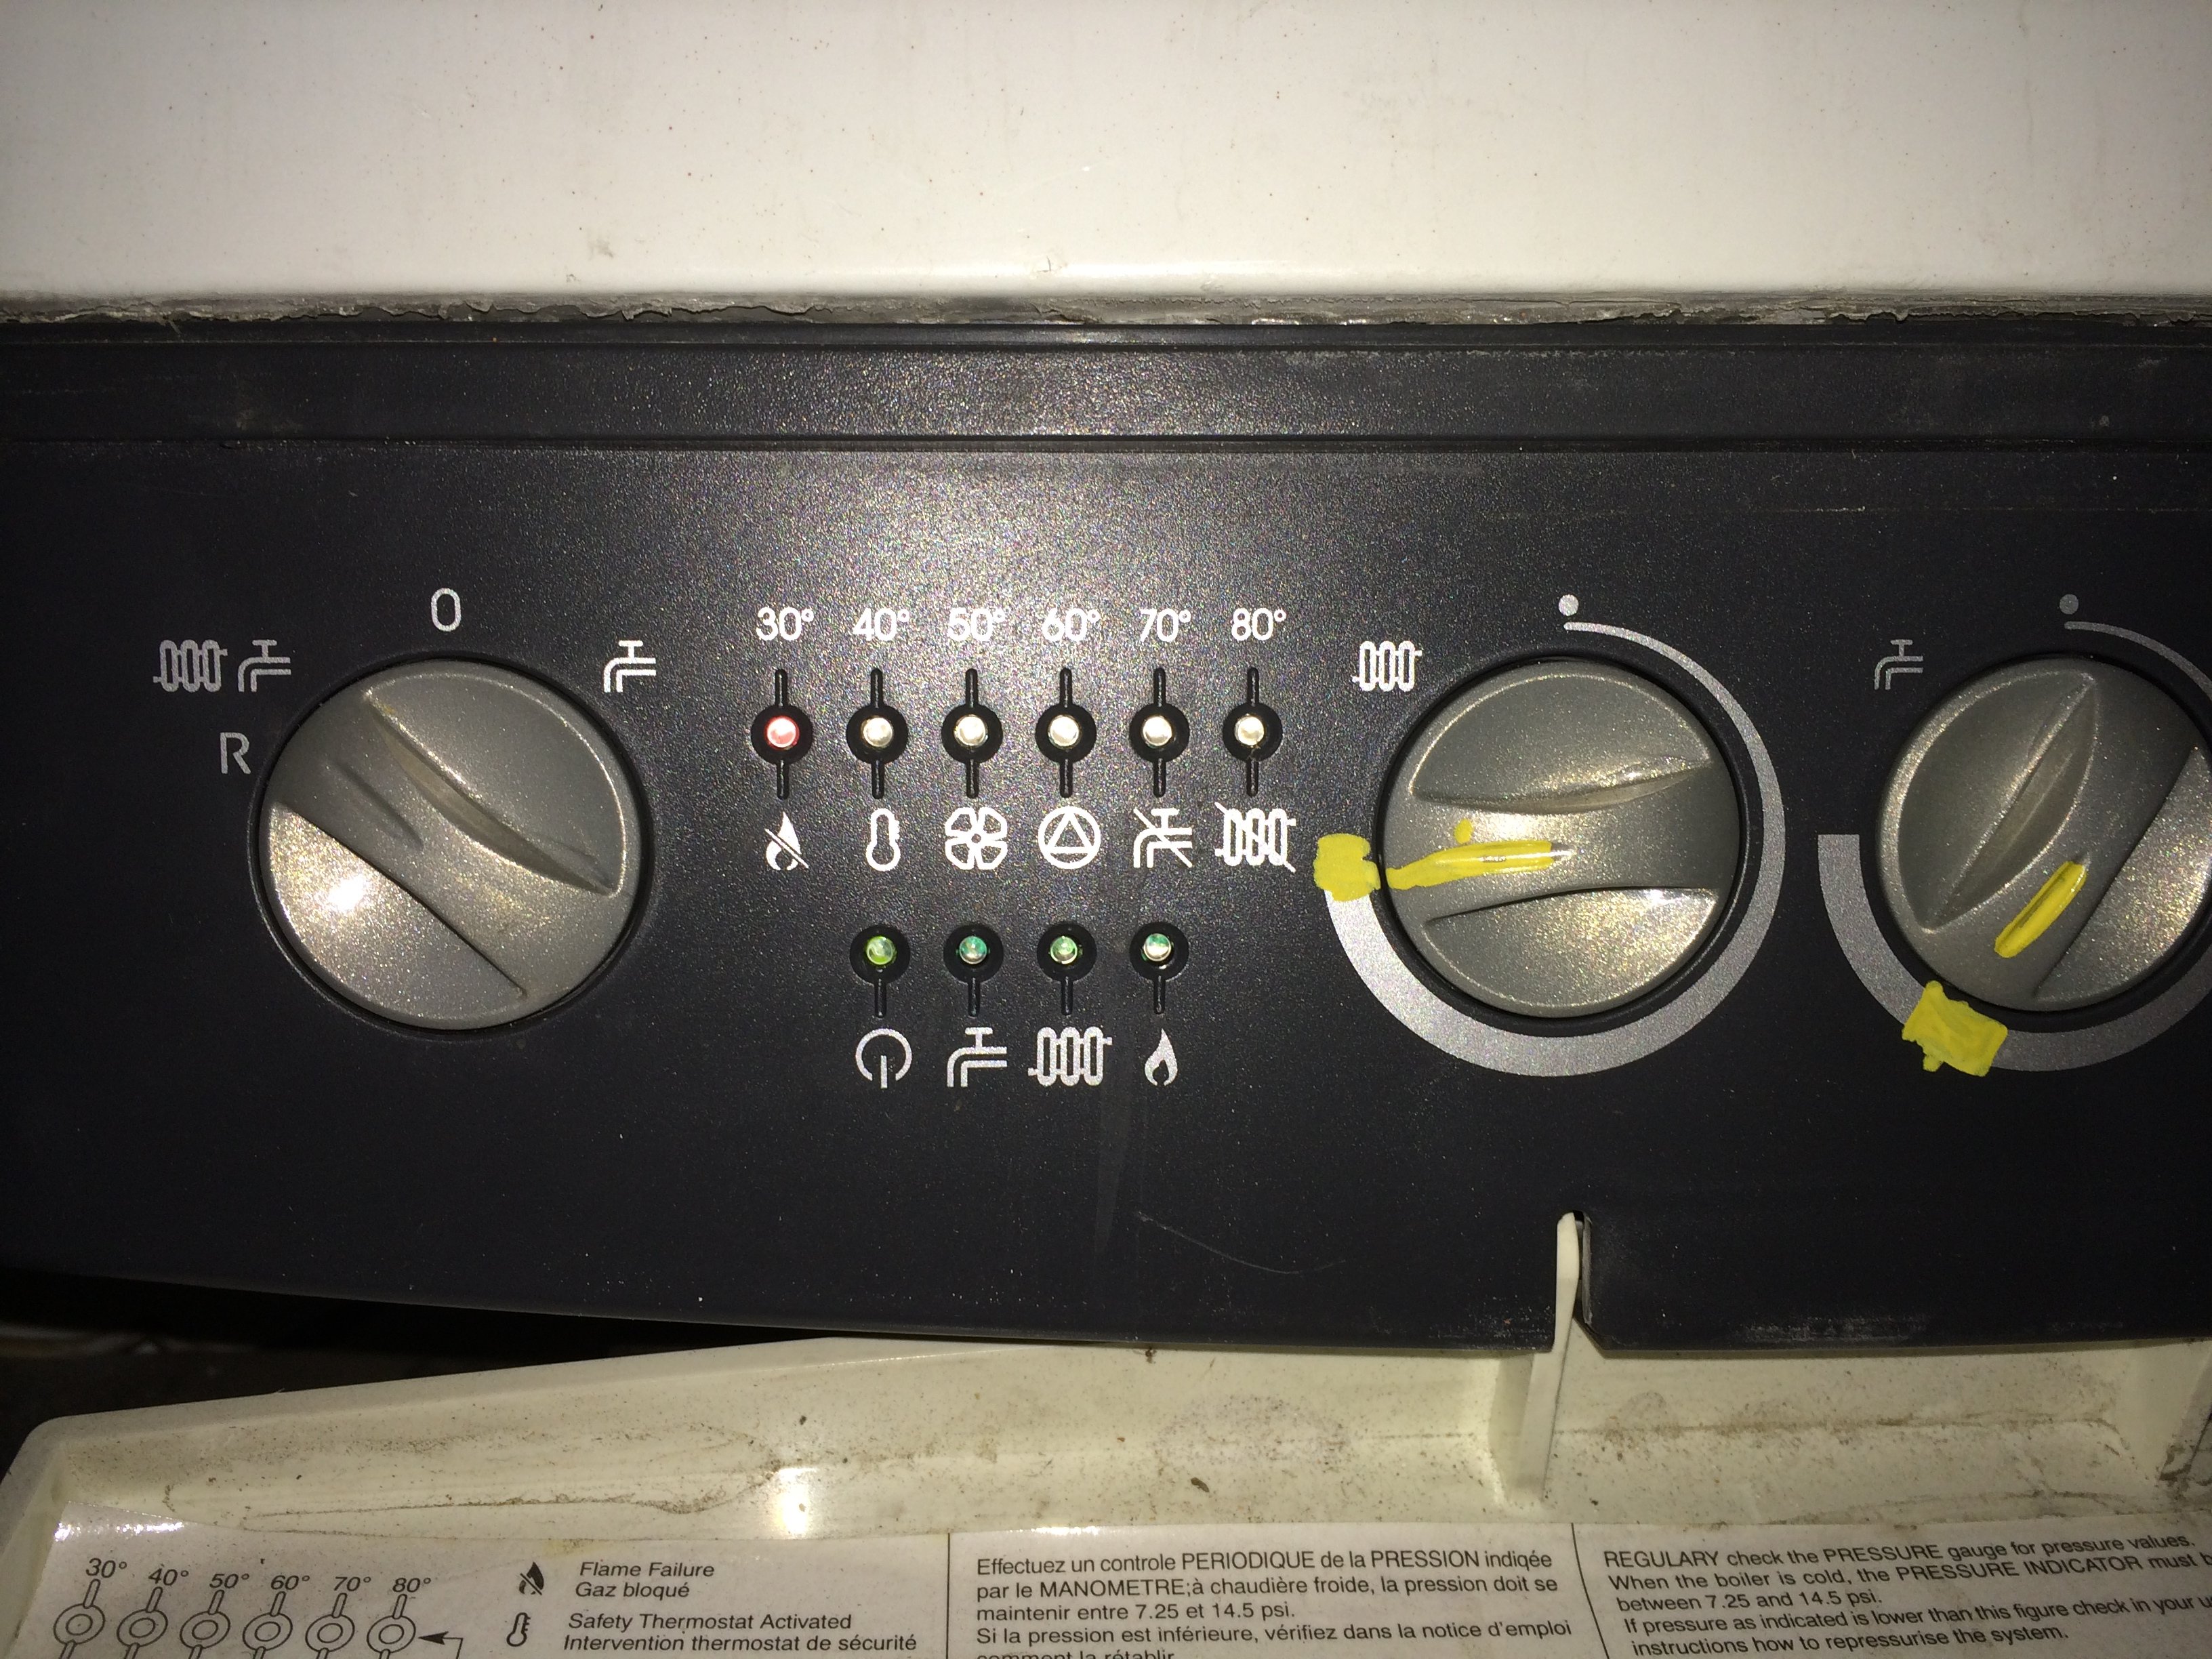 Baxi HE 105 Boilers 30 Degrees Light Flashing